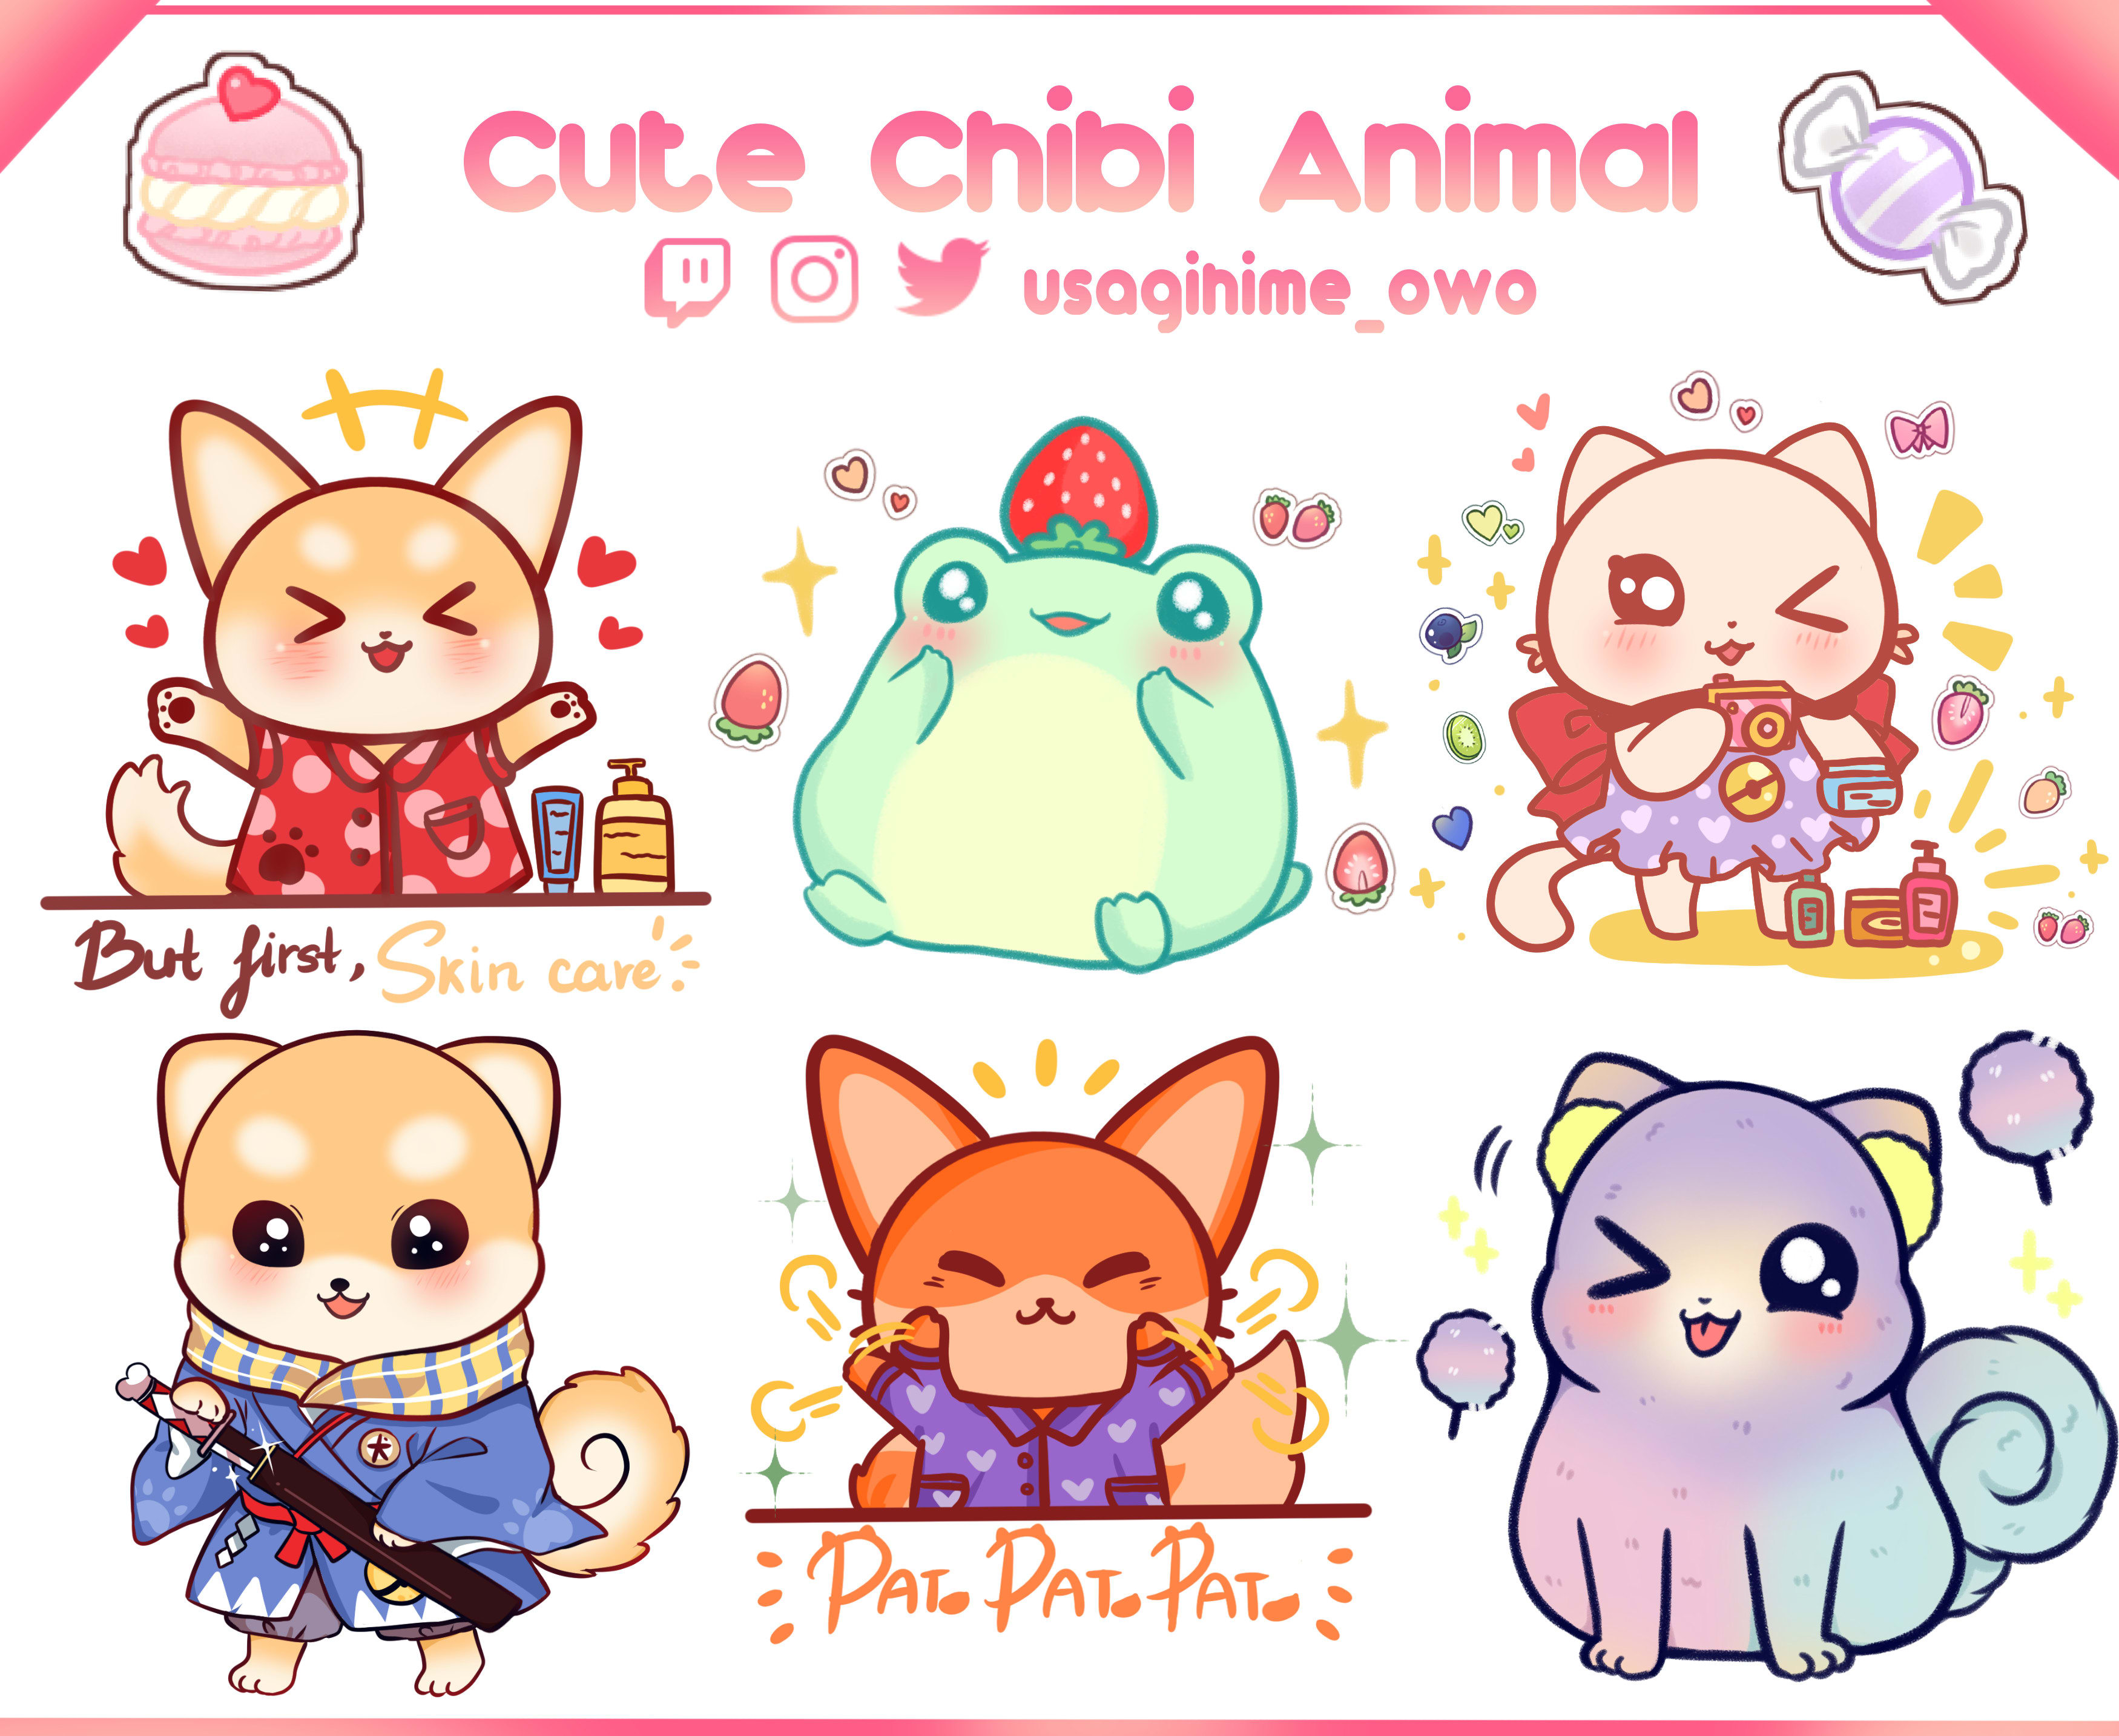 Draw cute kawaii chibi animal for you by Usagihimeowo | Fiverr